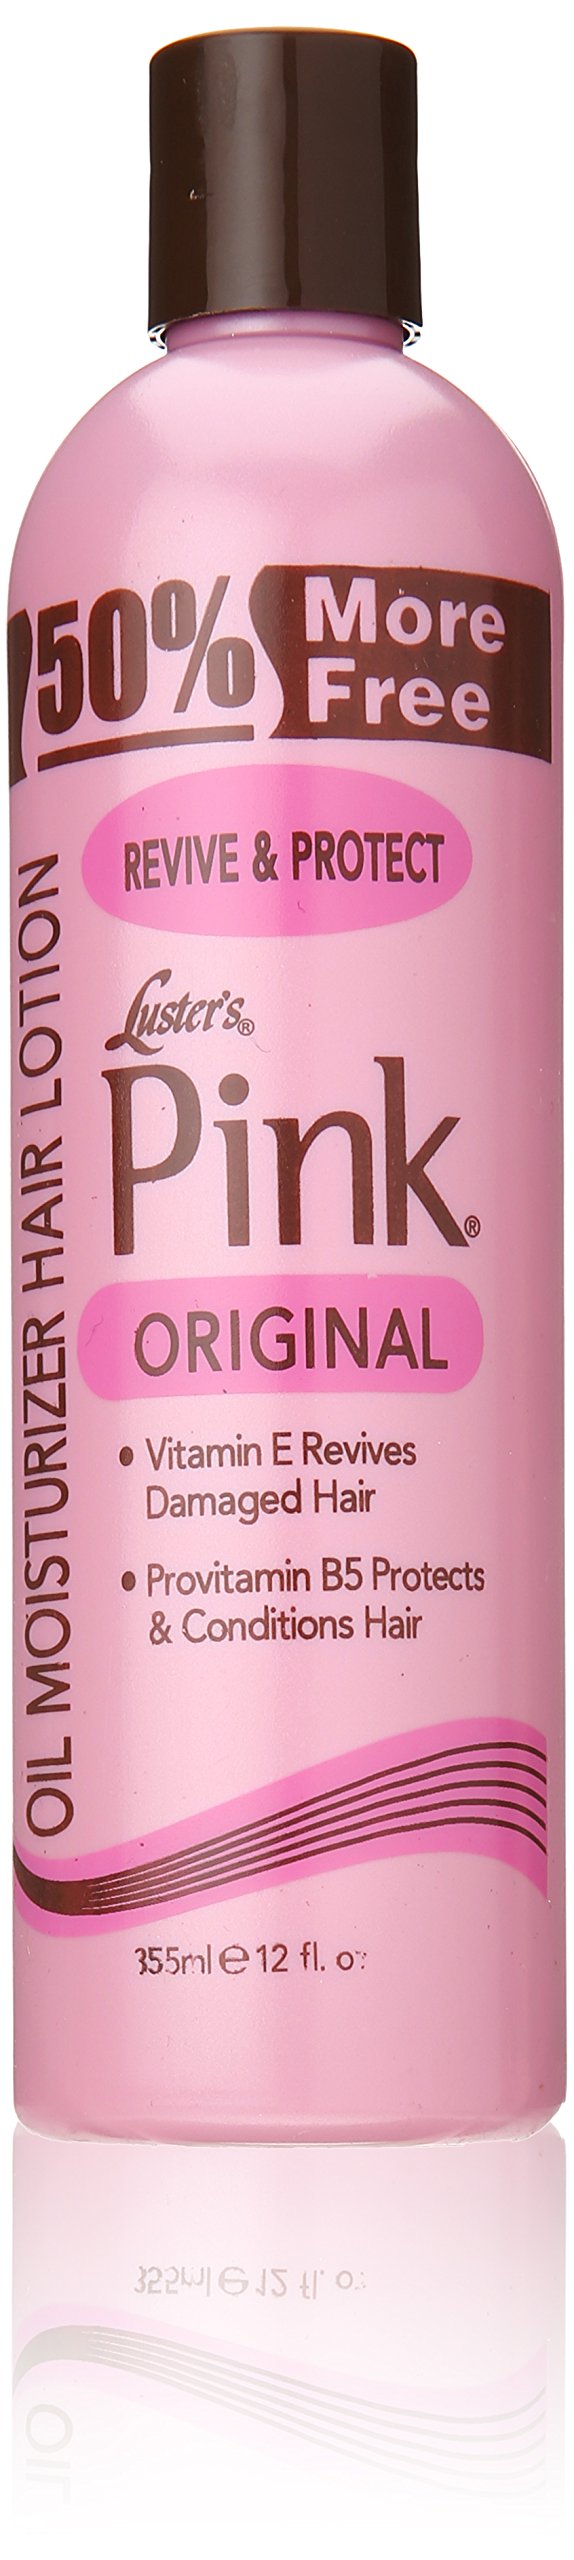 Luster's Pink Oil Moisturizer Hair Lotion, Original, 12 Oz - Beauty Fleet